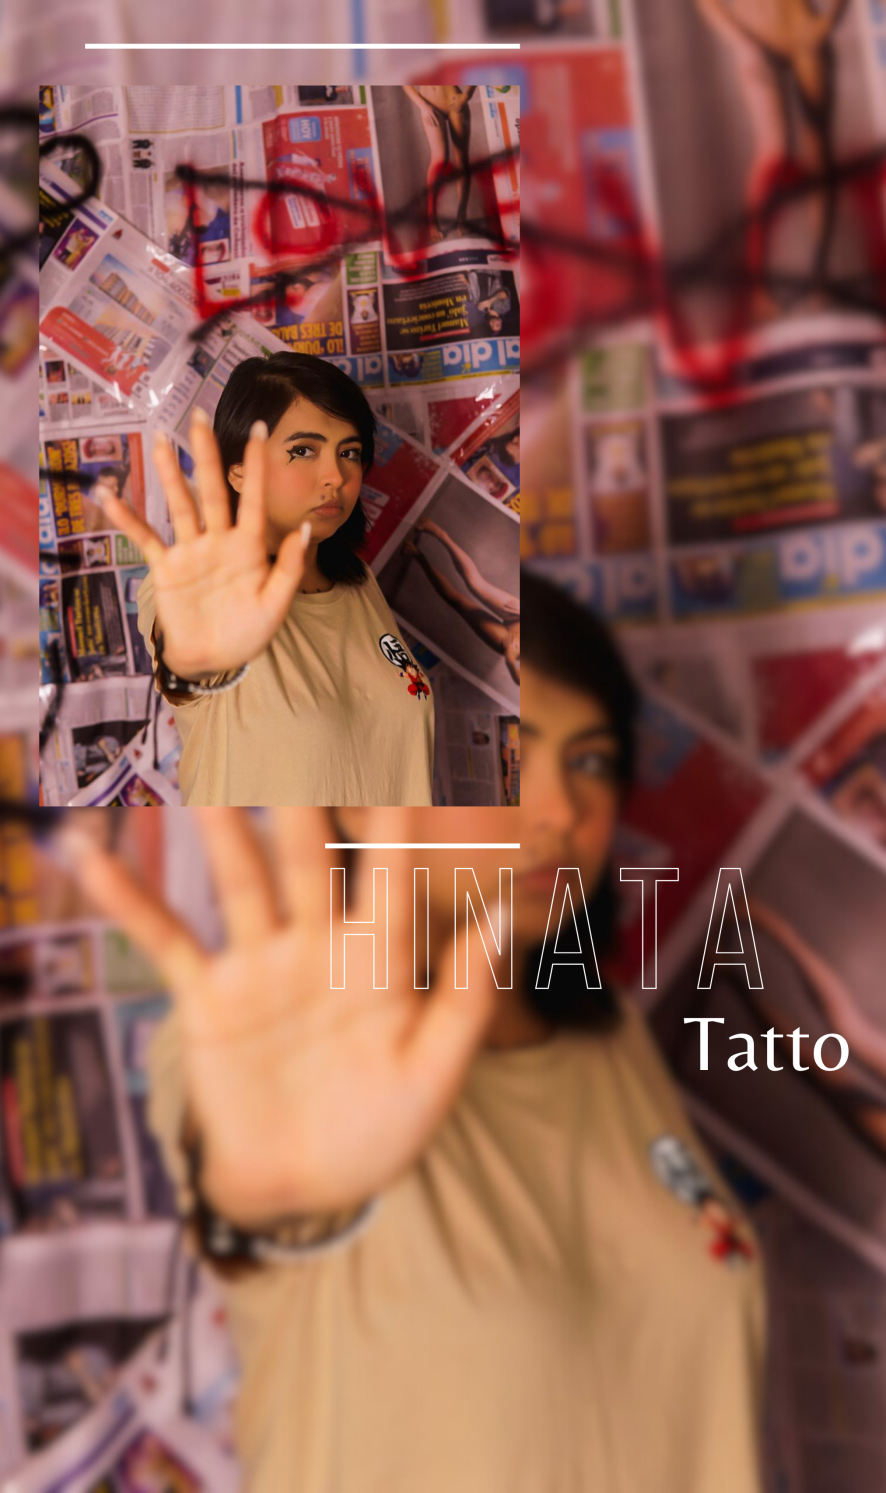 Hinata-tatto Me image: 1